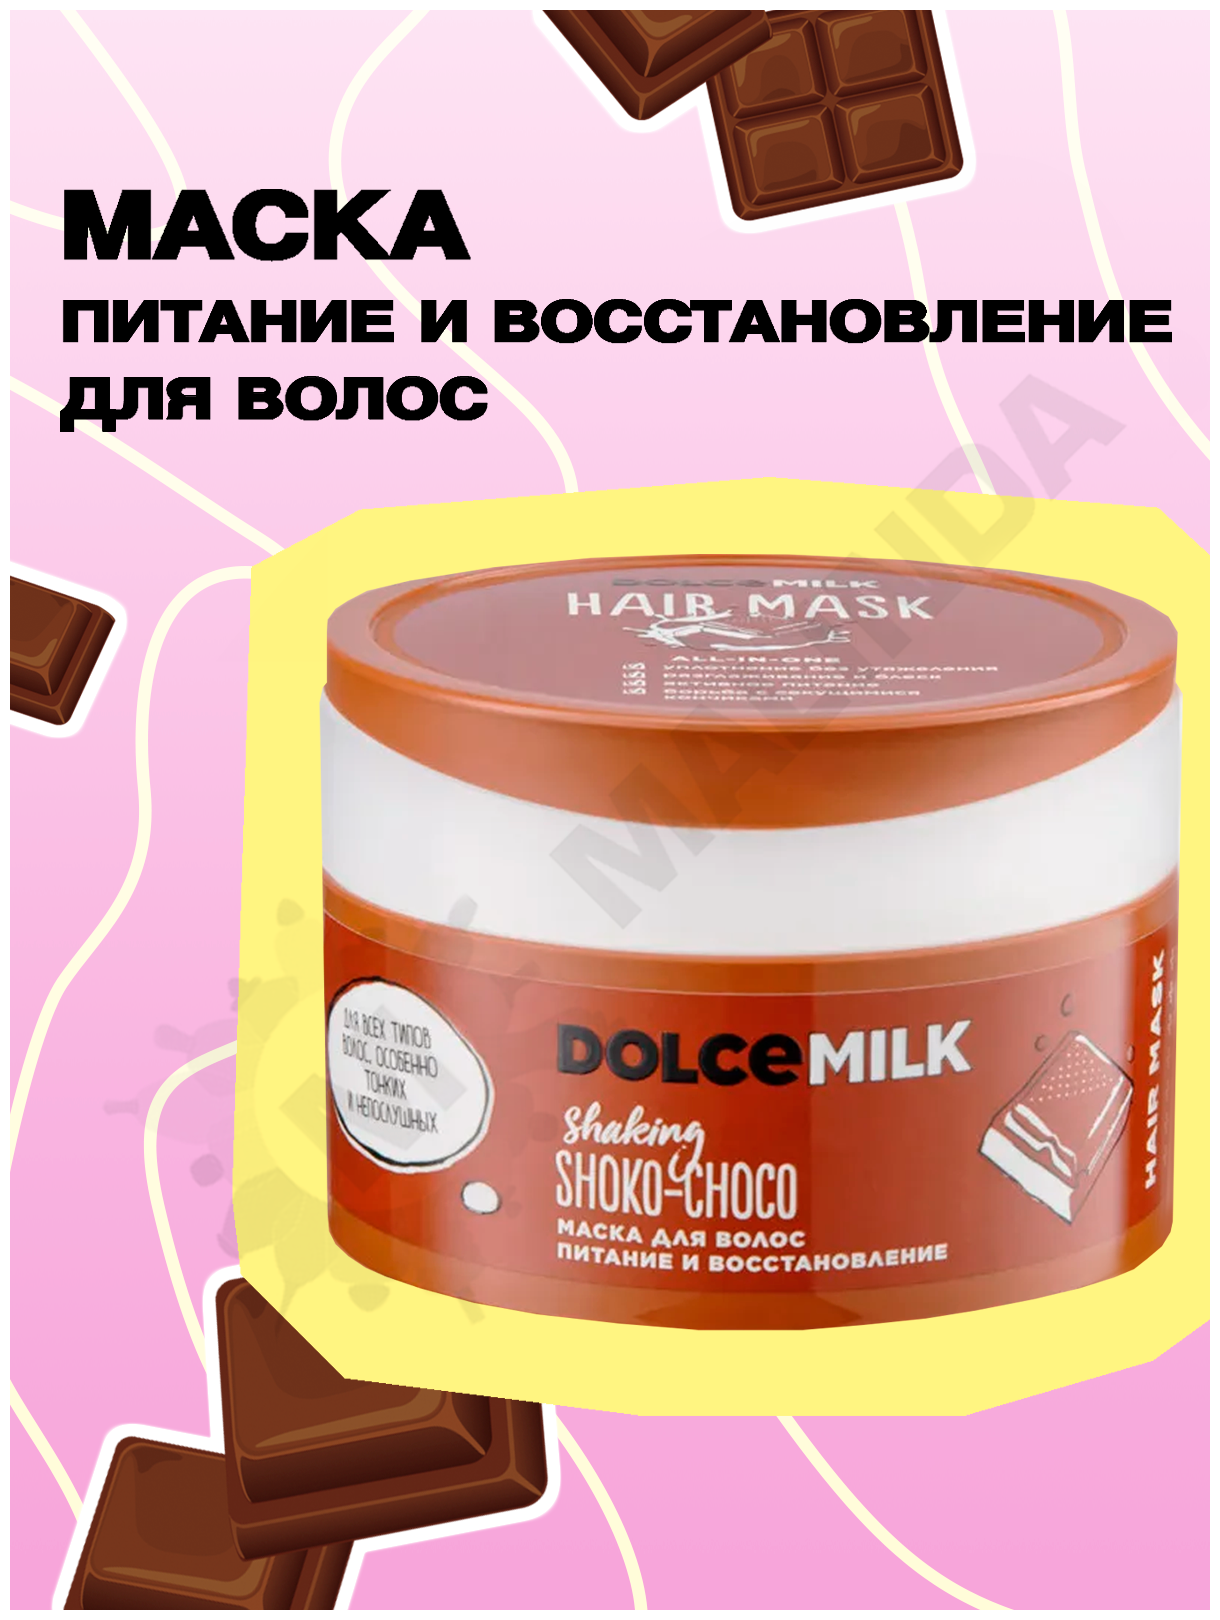 DOLCE MILK Маска питание и восстановление Мулатка-шоколадка 200 мл